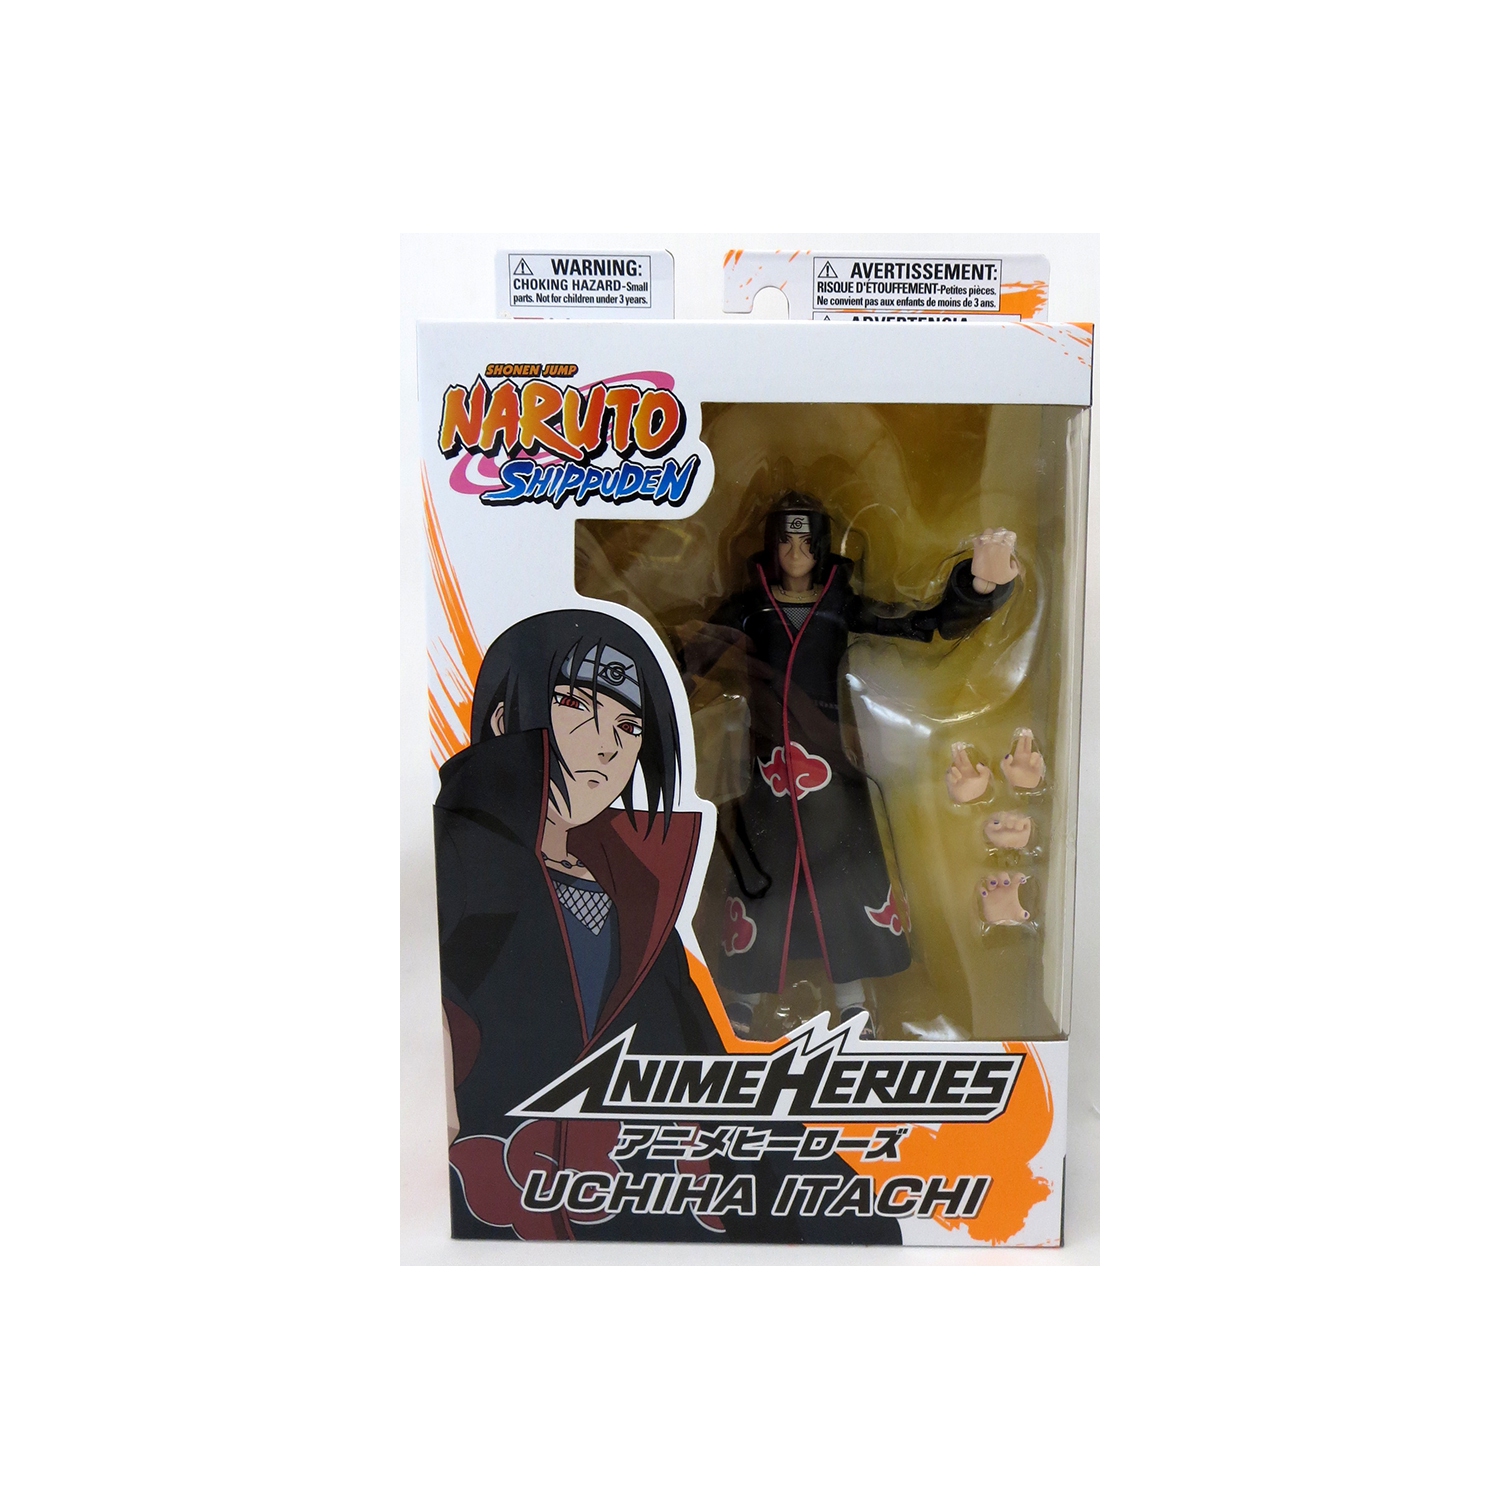 Naruto Shippuden 6 Inch Action Figure Anime Heroes - Uchiha Itachi